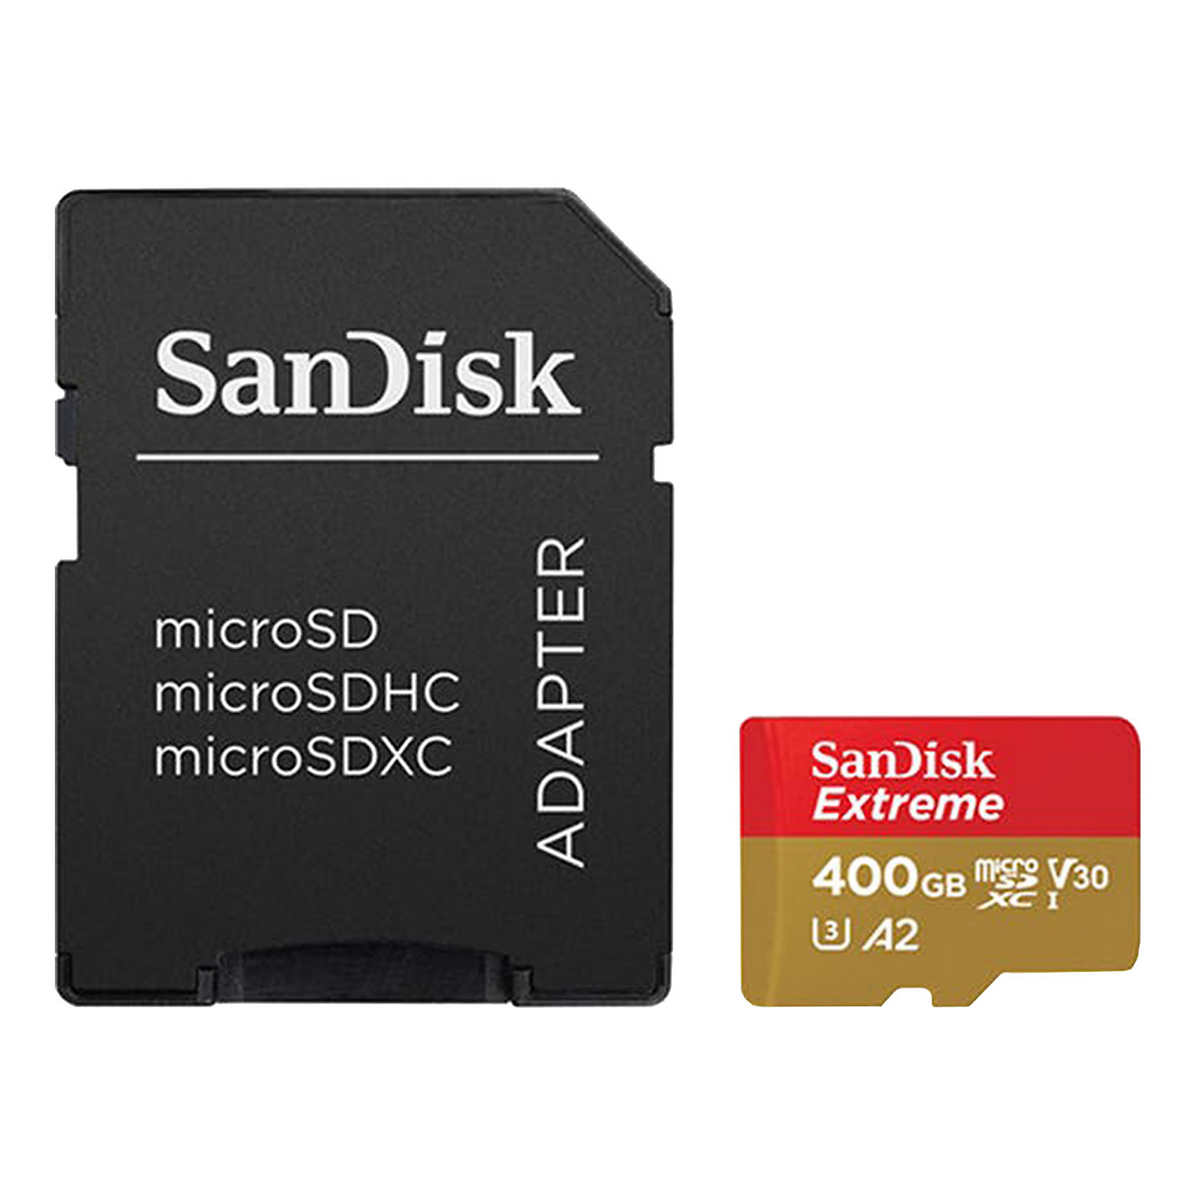 Costco B&M 400GB Sandisk Extreme microSDXC UHS-I Card - $49.99